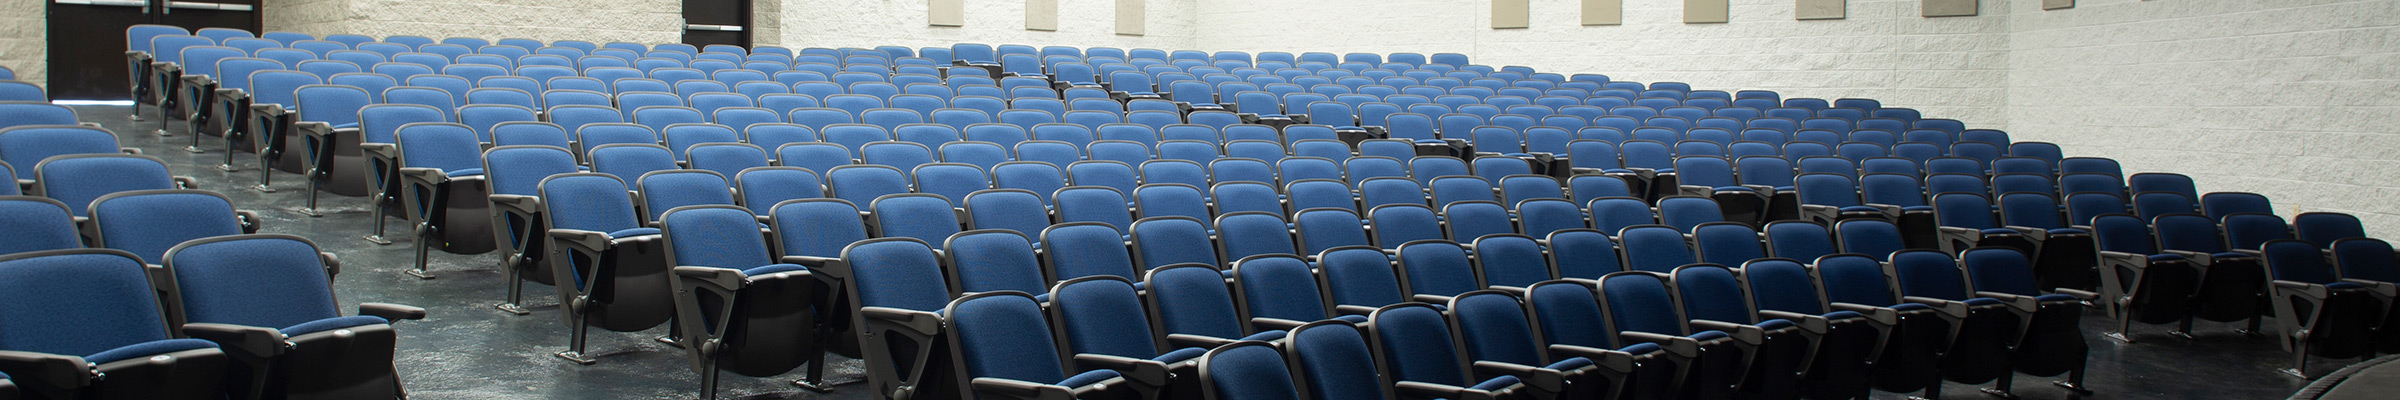 Etowa High School fixed auditorium seating